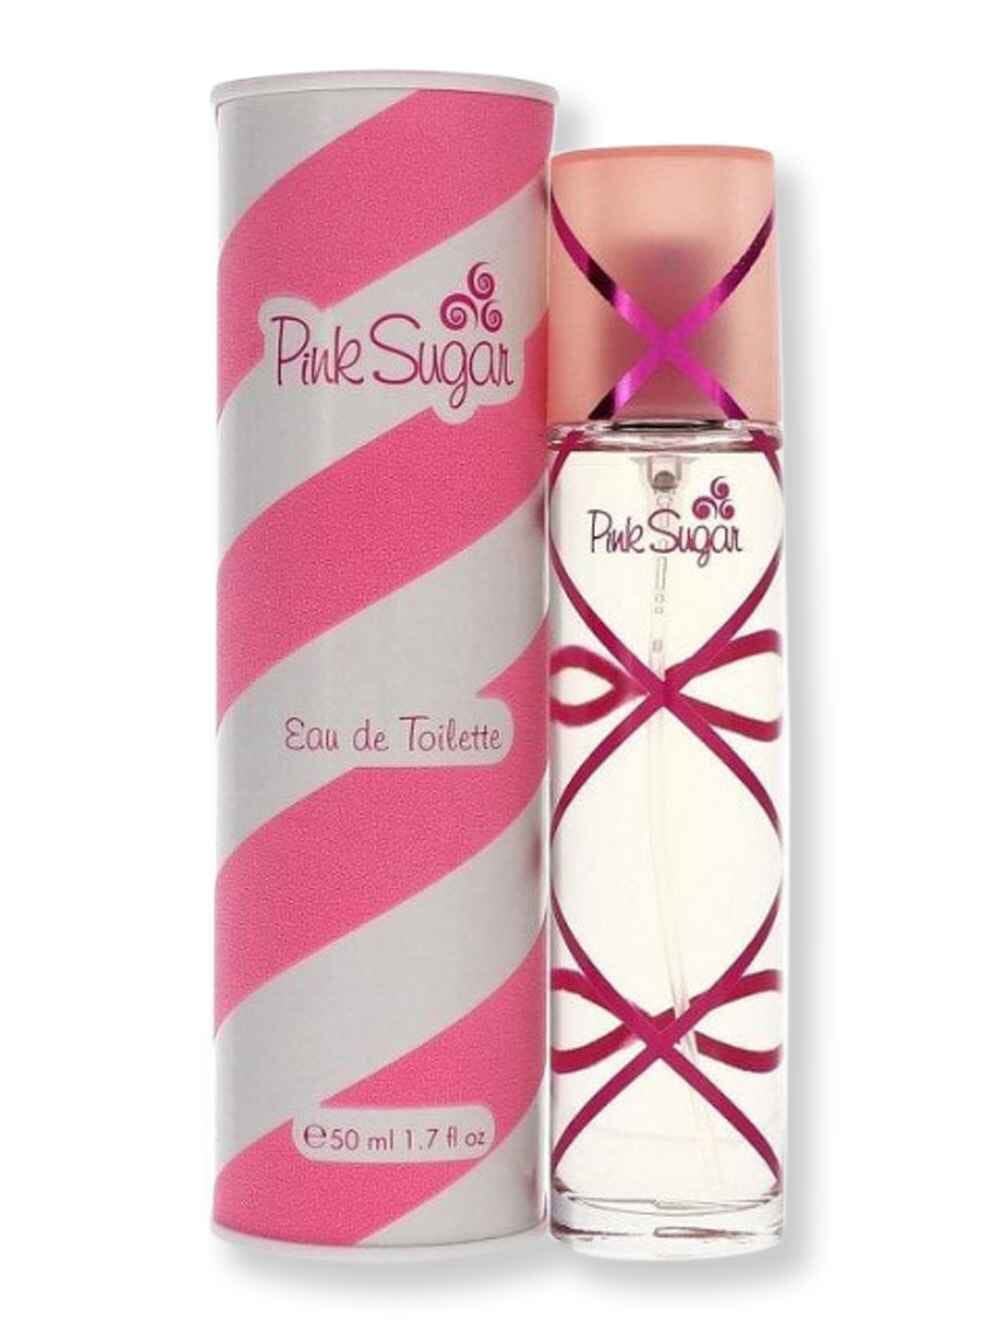 Aquolina Aquolina Pink Sugar EDT Spray 1.7 oz50 ml Perfume 